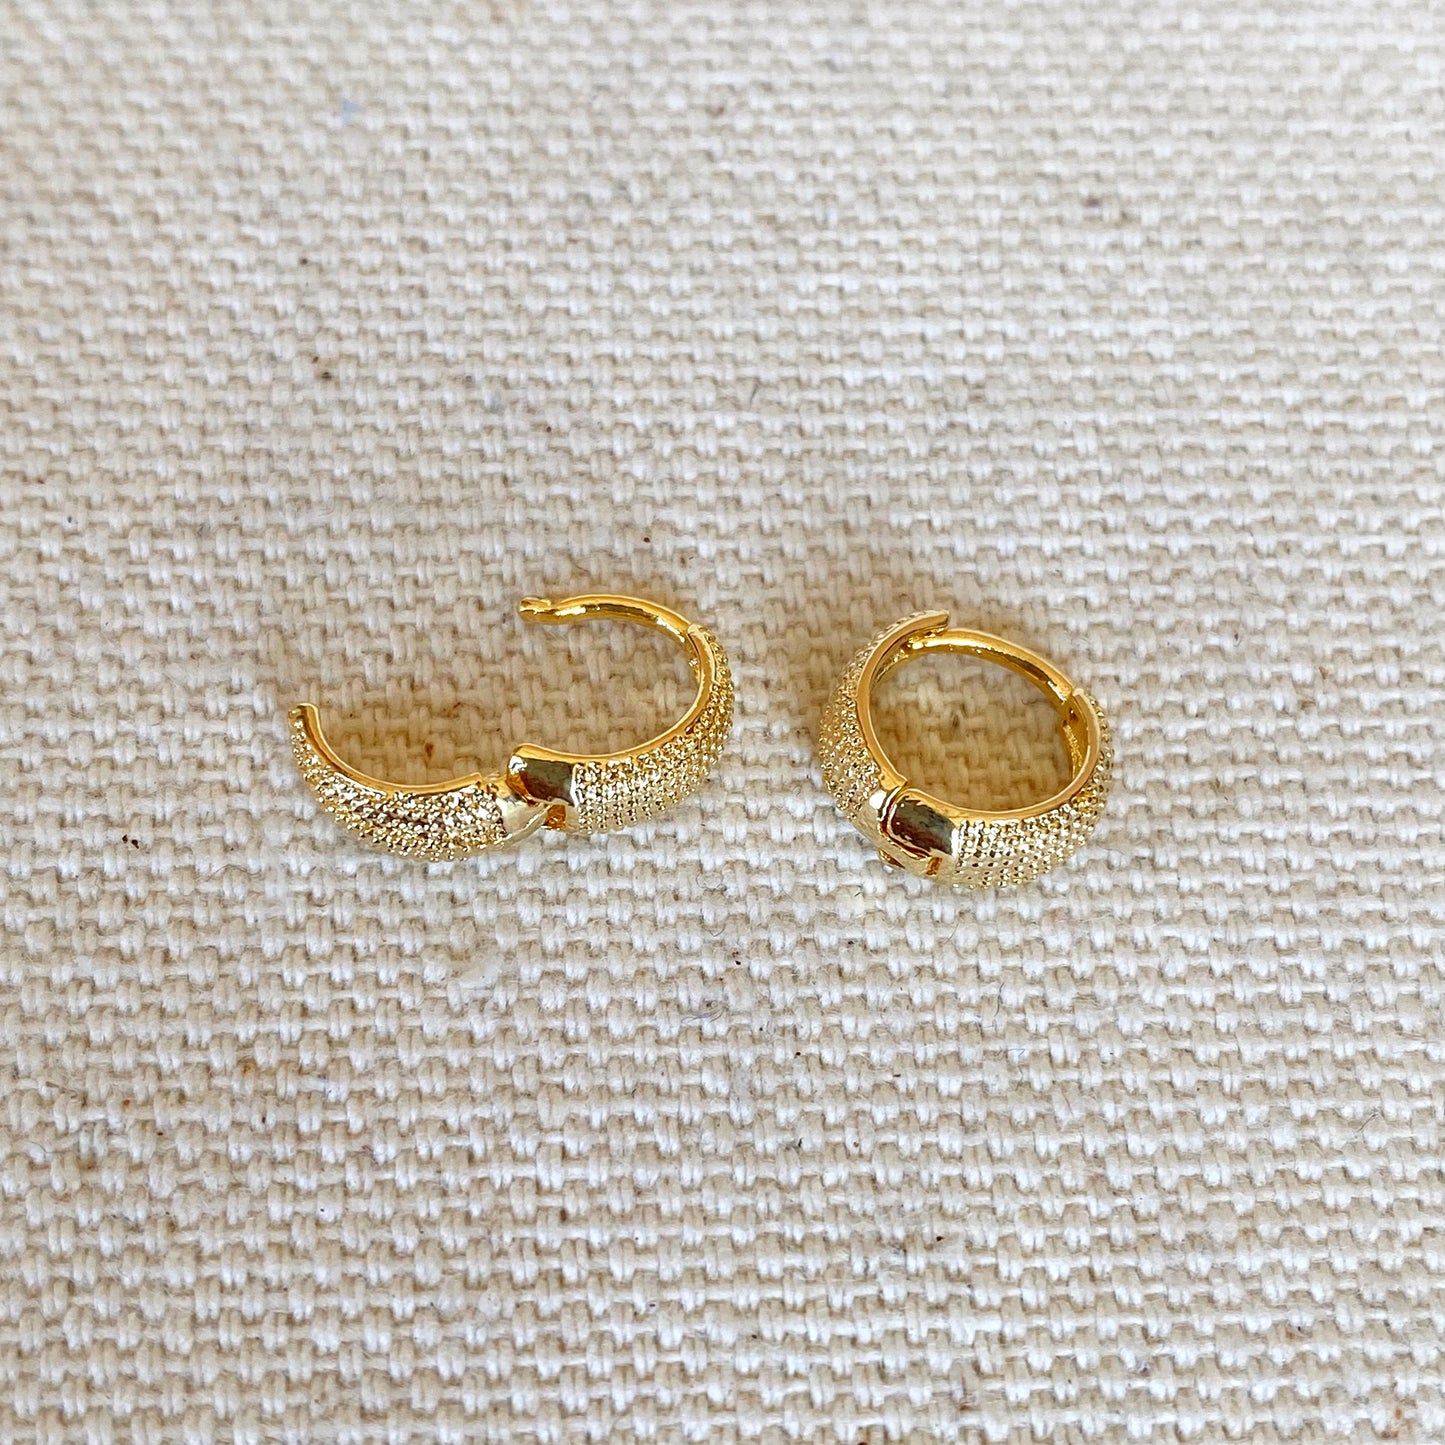 GoldFi 18k Gold Filled Tiny Textured Clicker Hoop Earrings